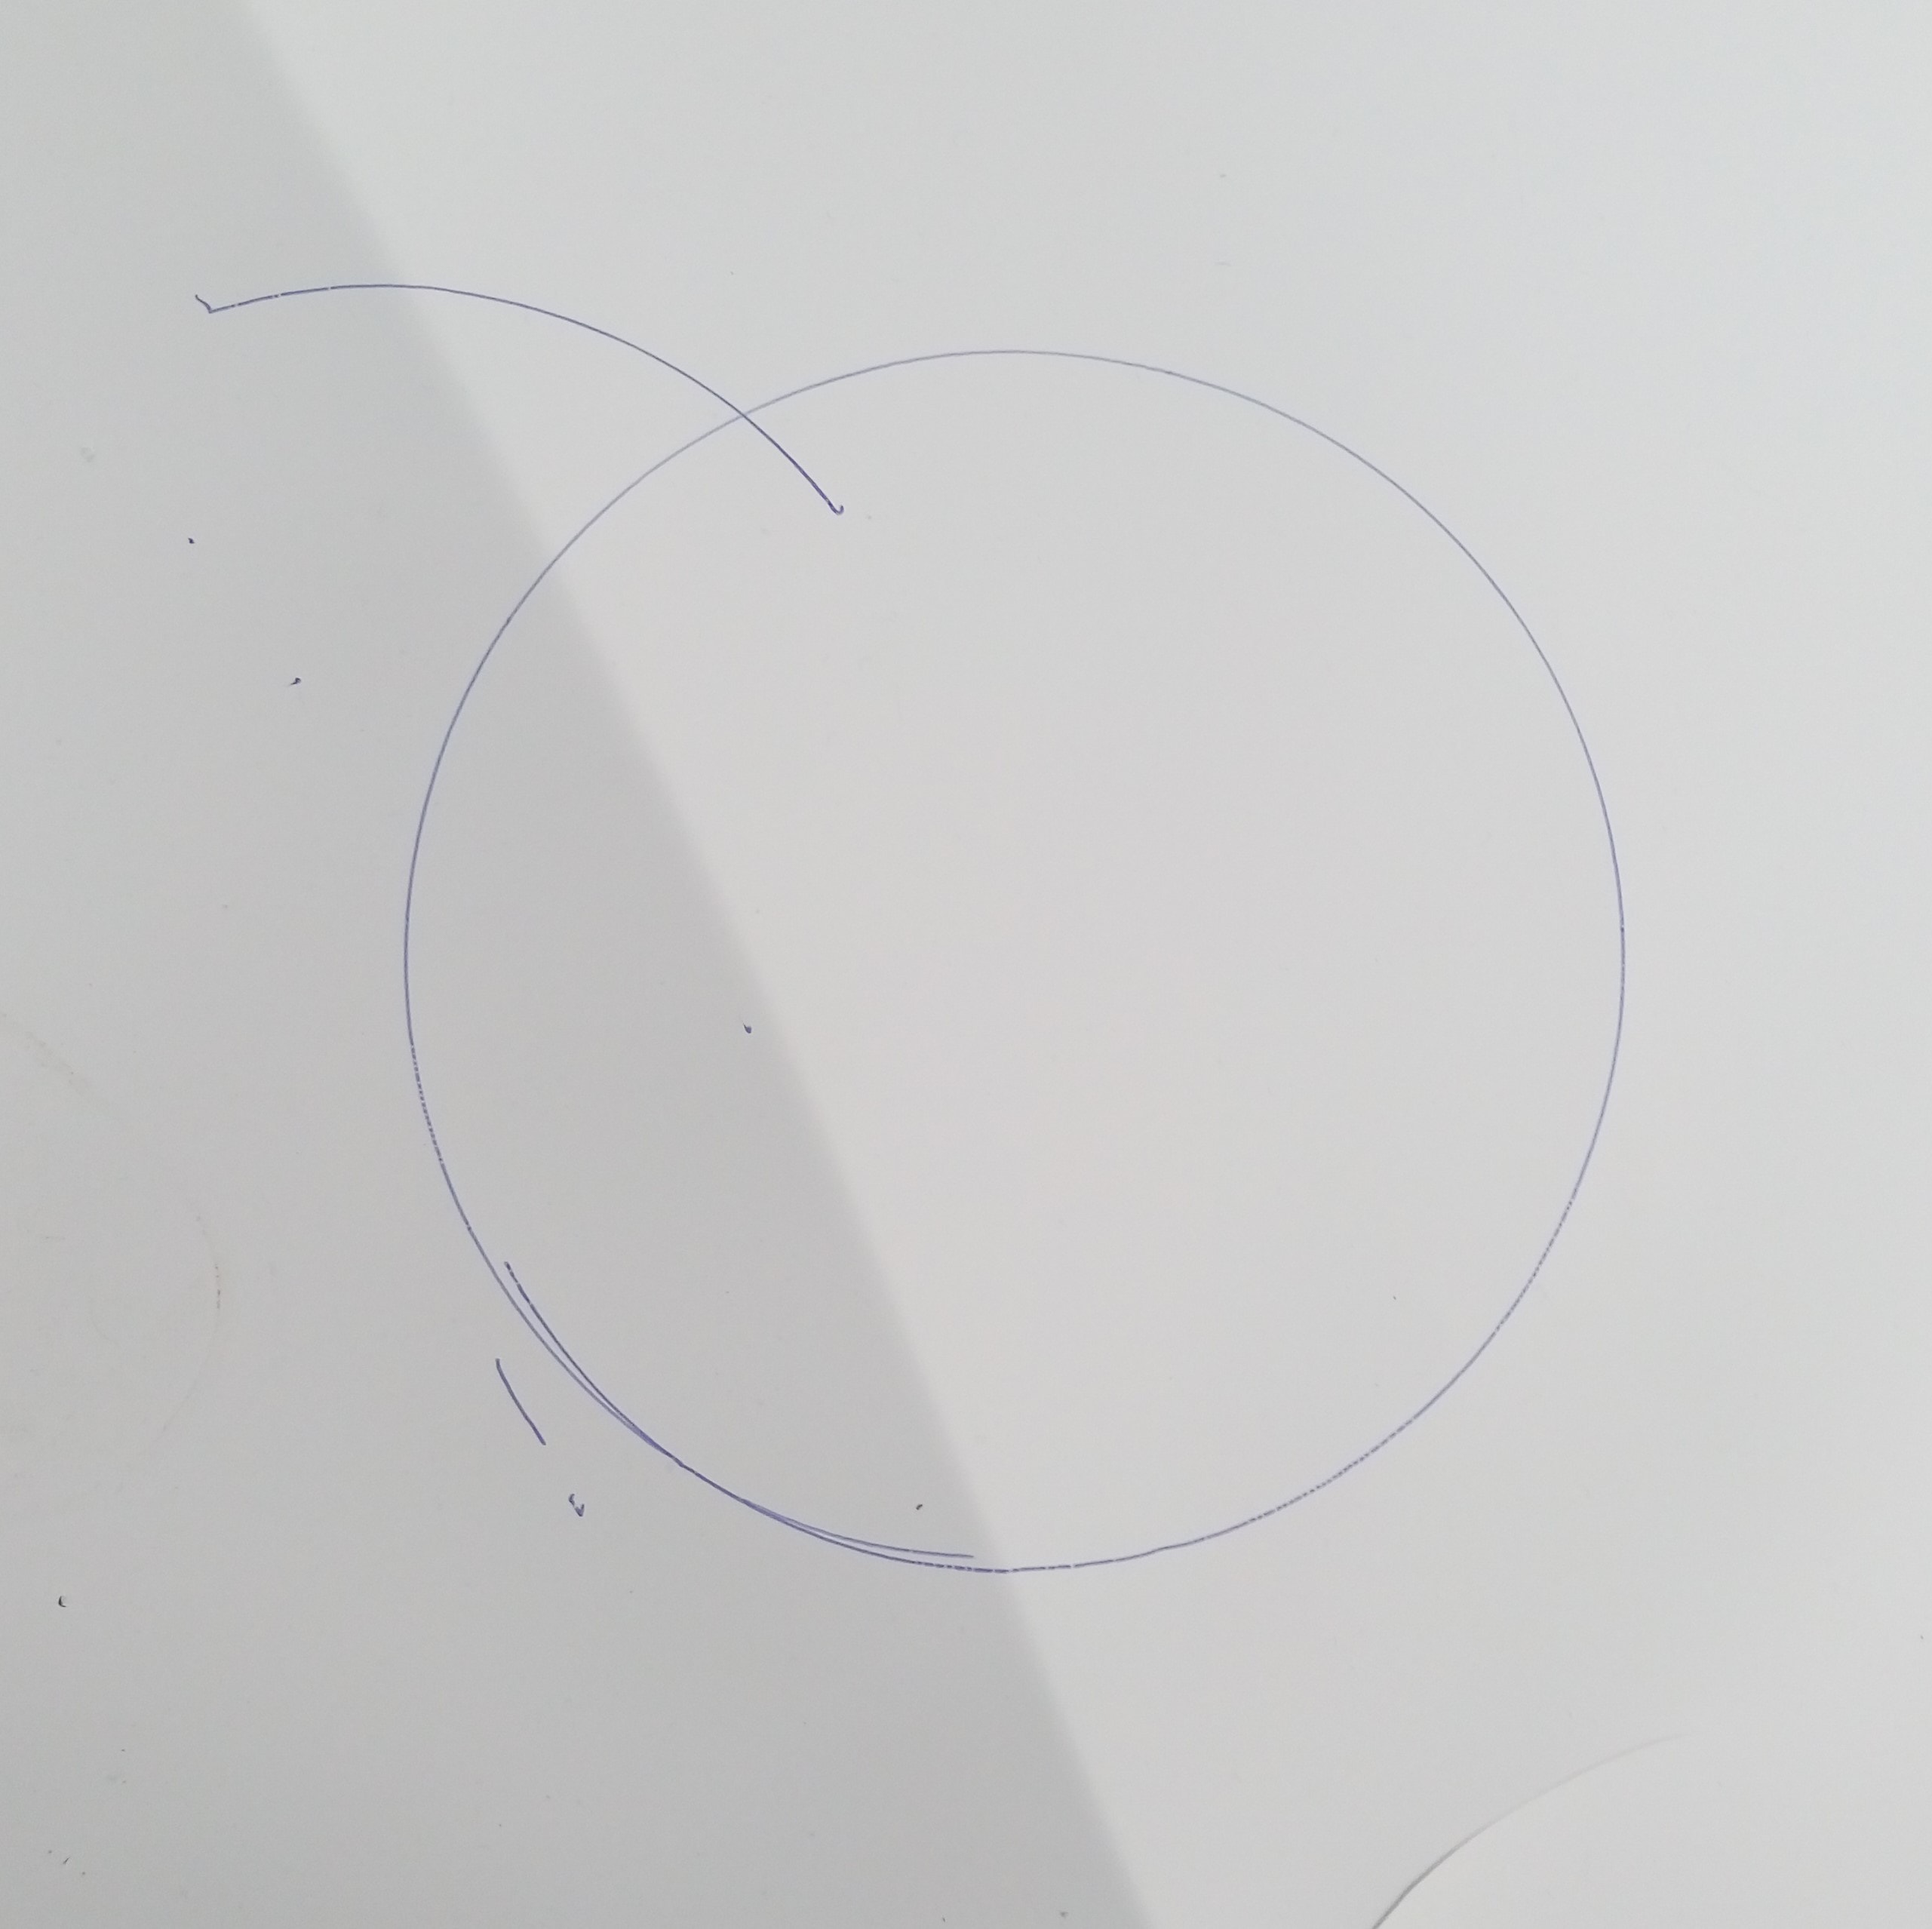 drawncircle